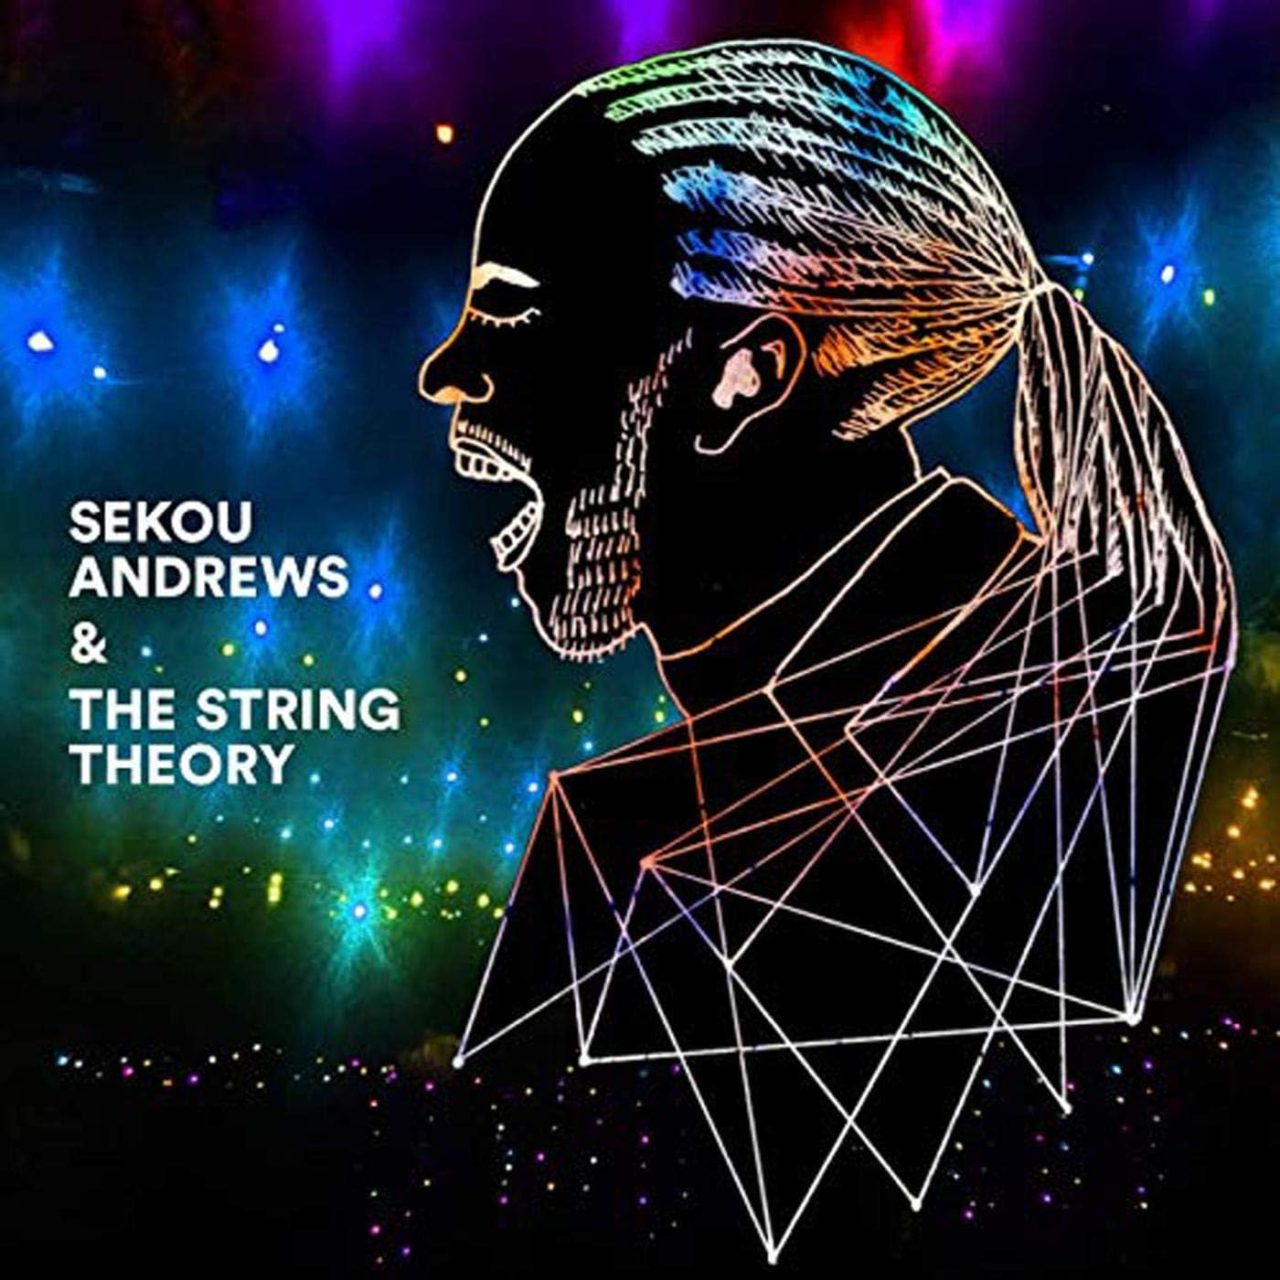 Sekou Andews & The String Theory